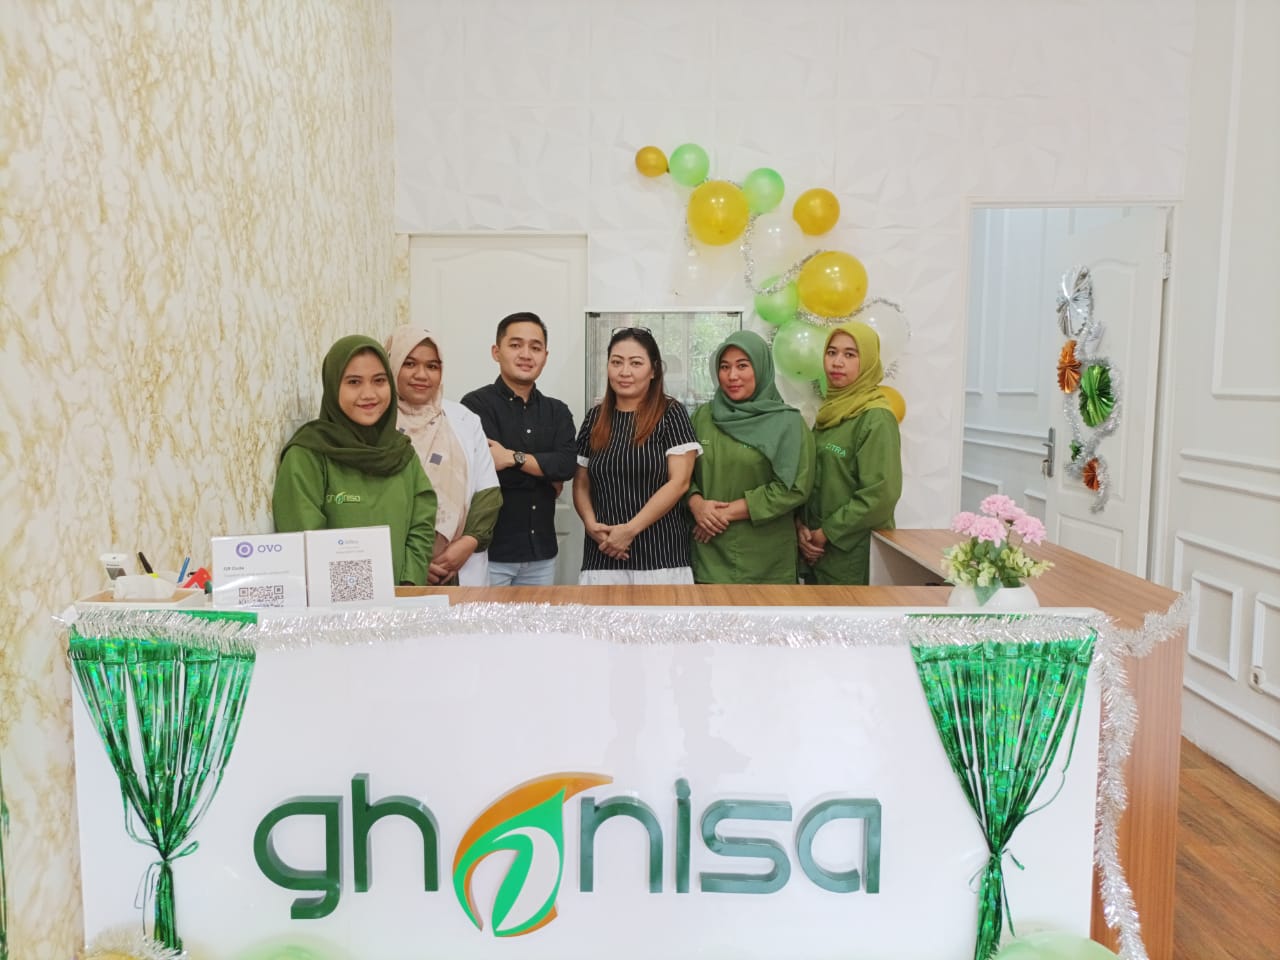 Ghanisa Aestetic Soft Opening di Jakarta Barat, Berikan Diskon 50% ke Customer